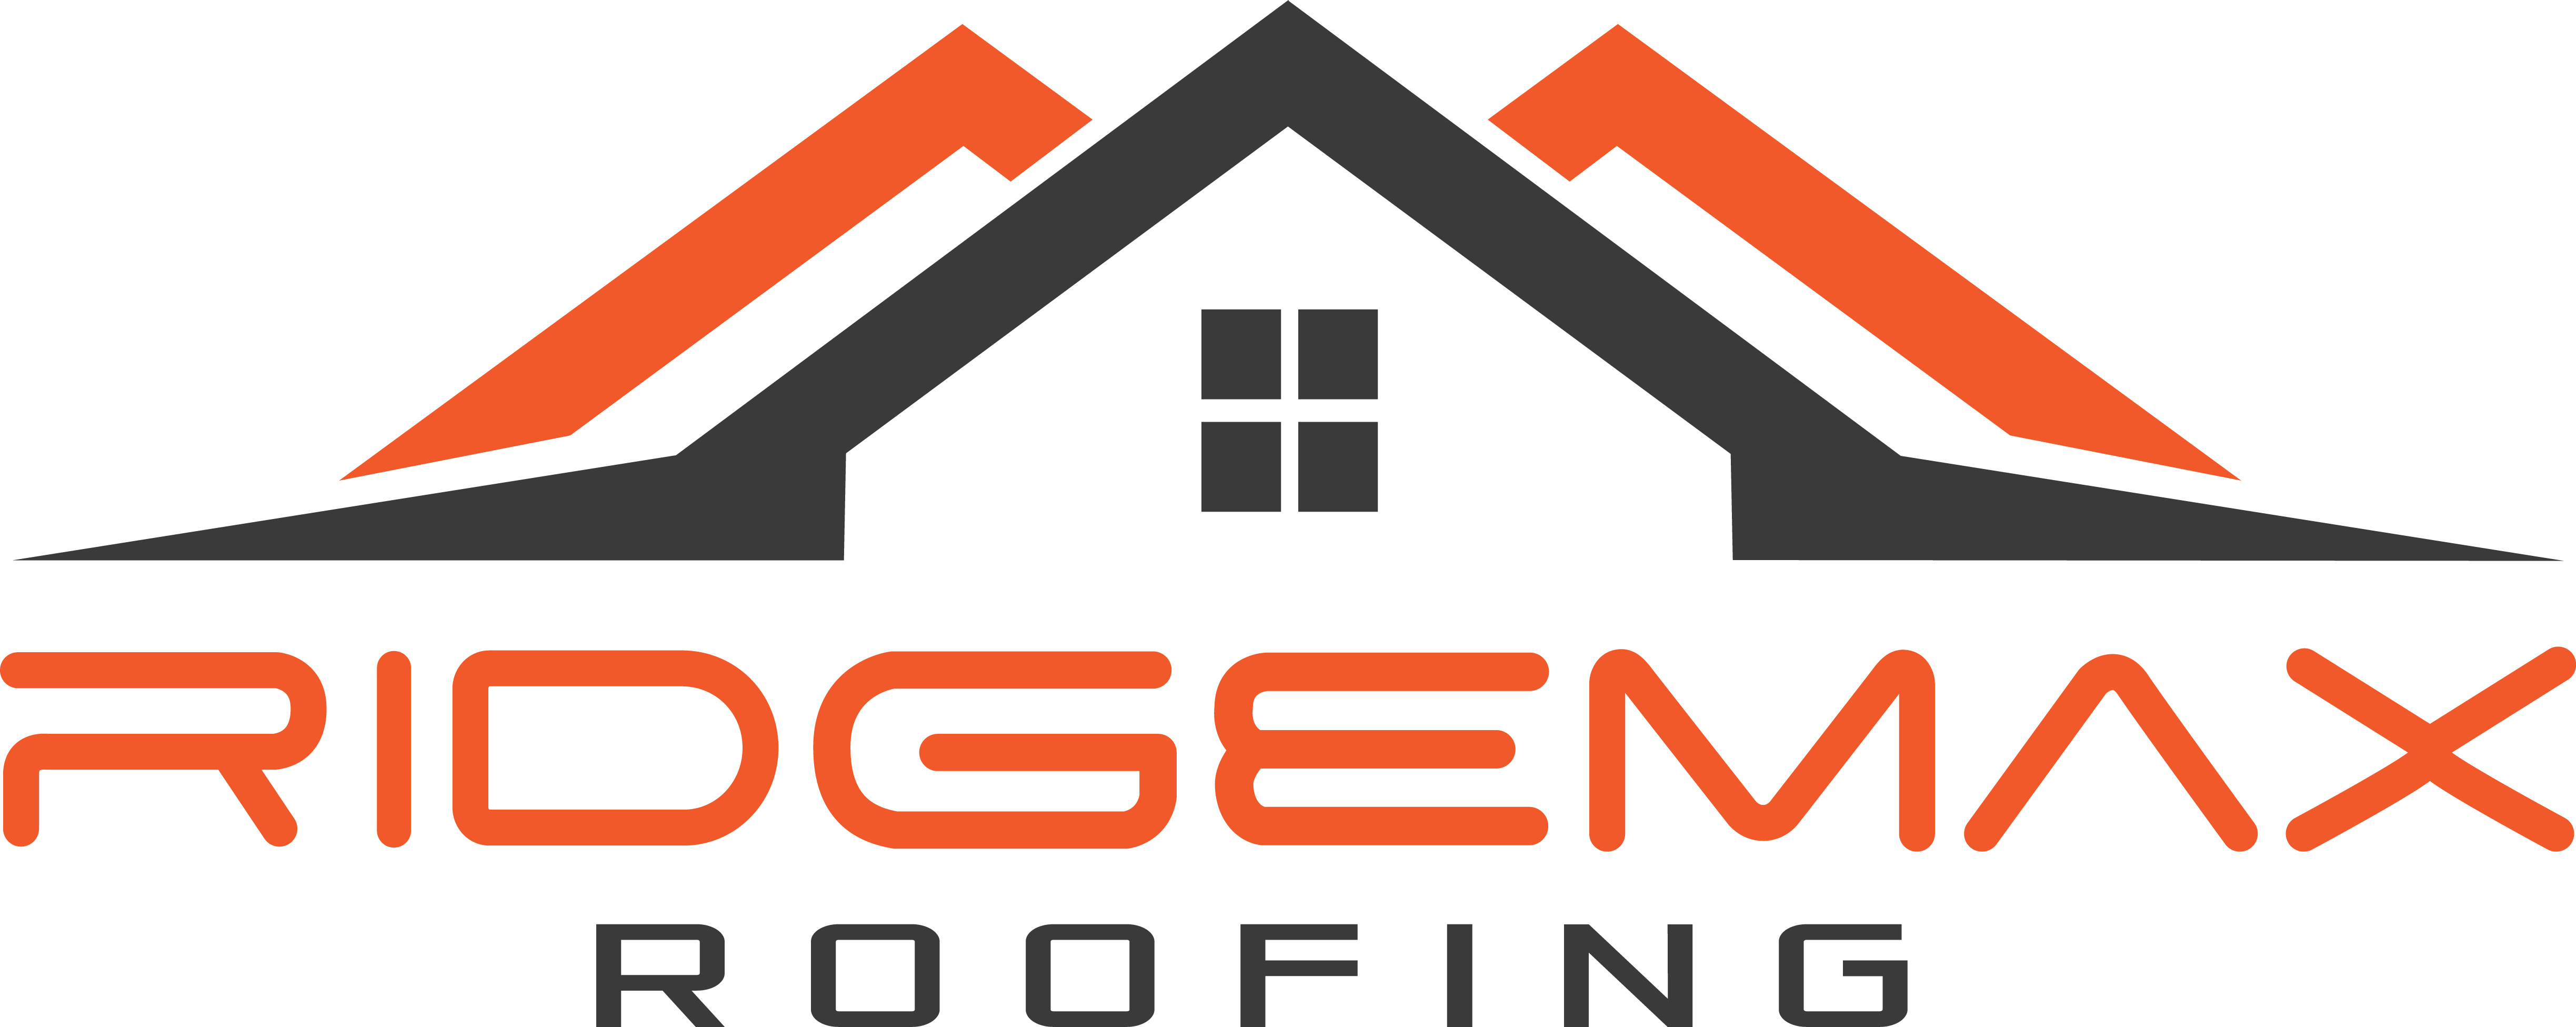 Ridge Max Roofing, Inc. Logo